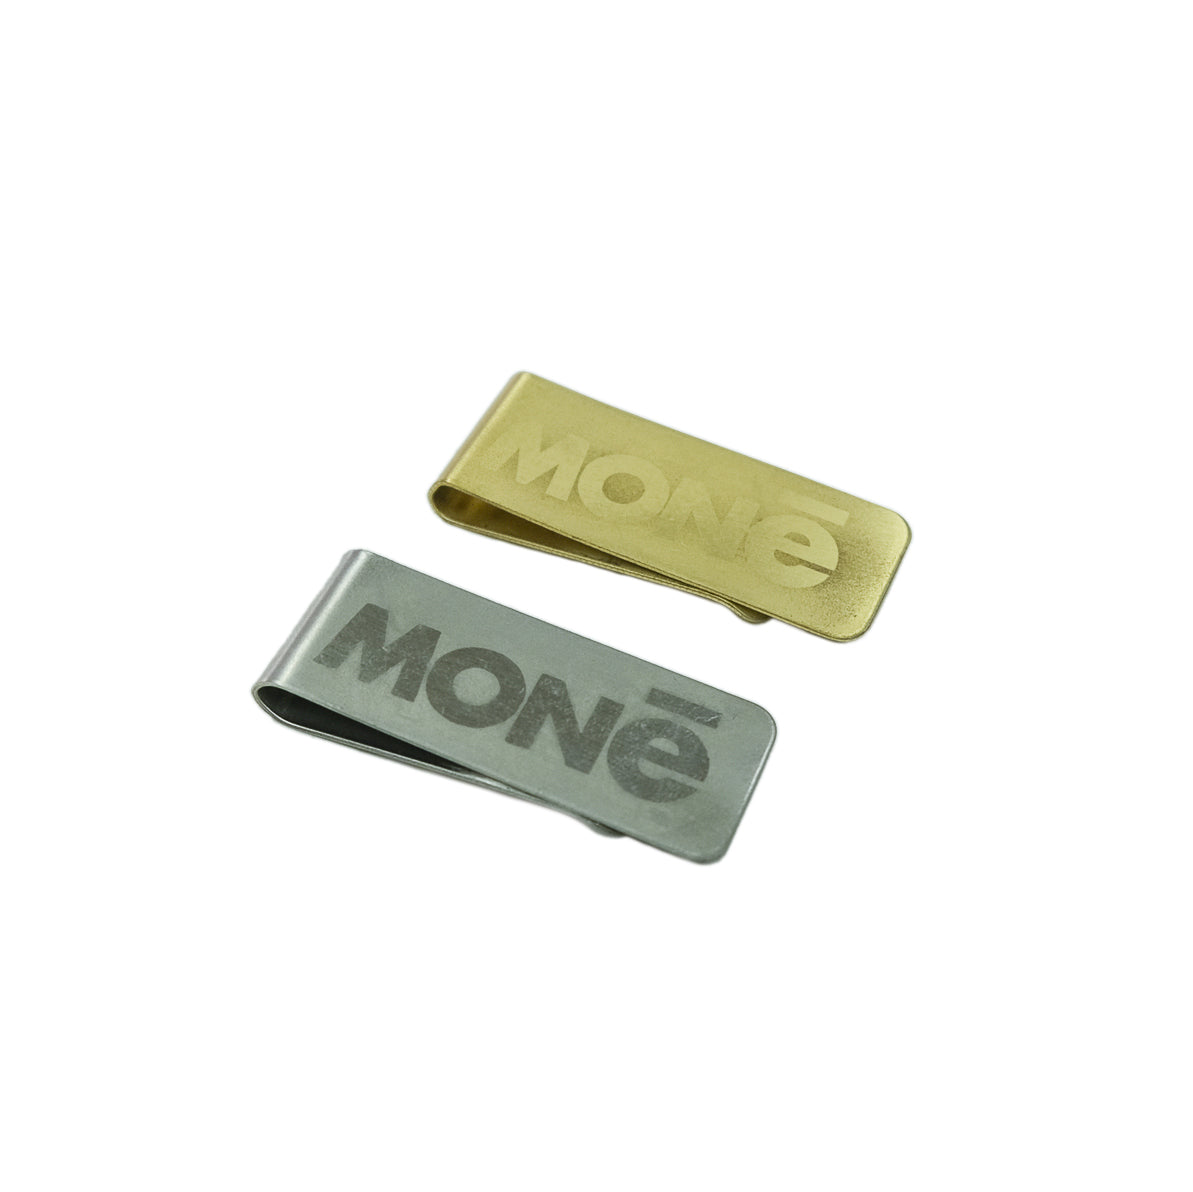 MONE money clip